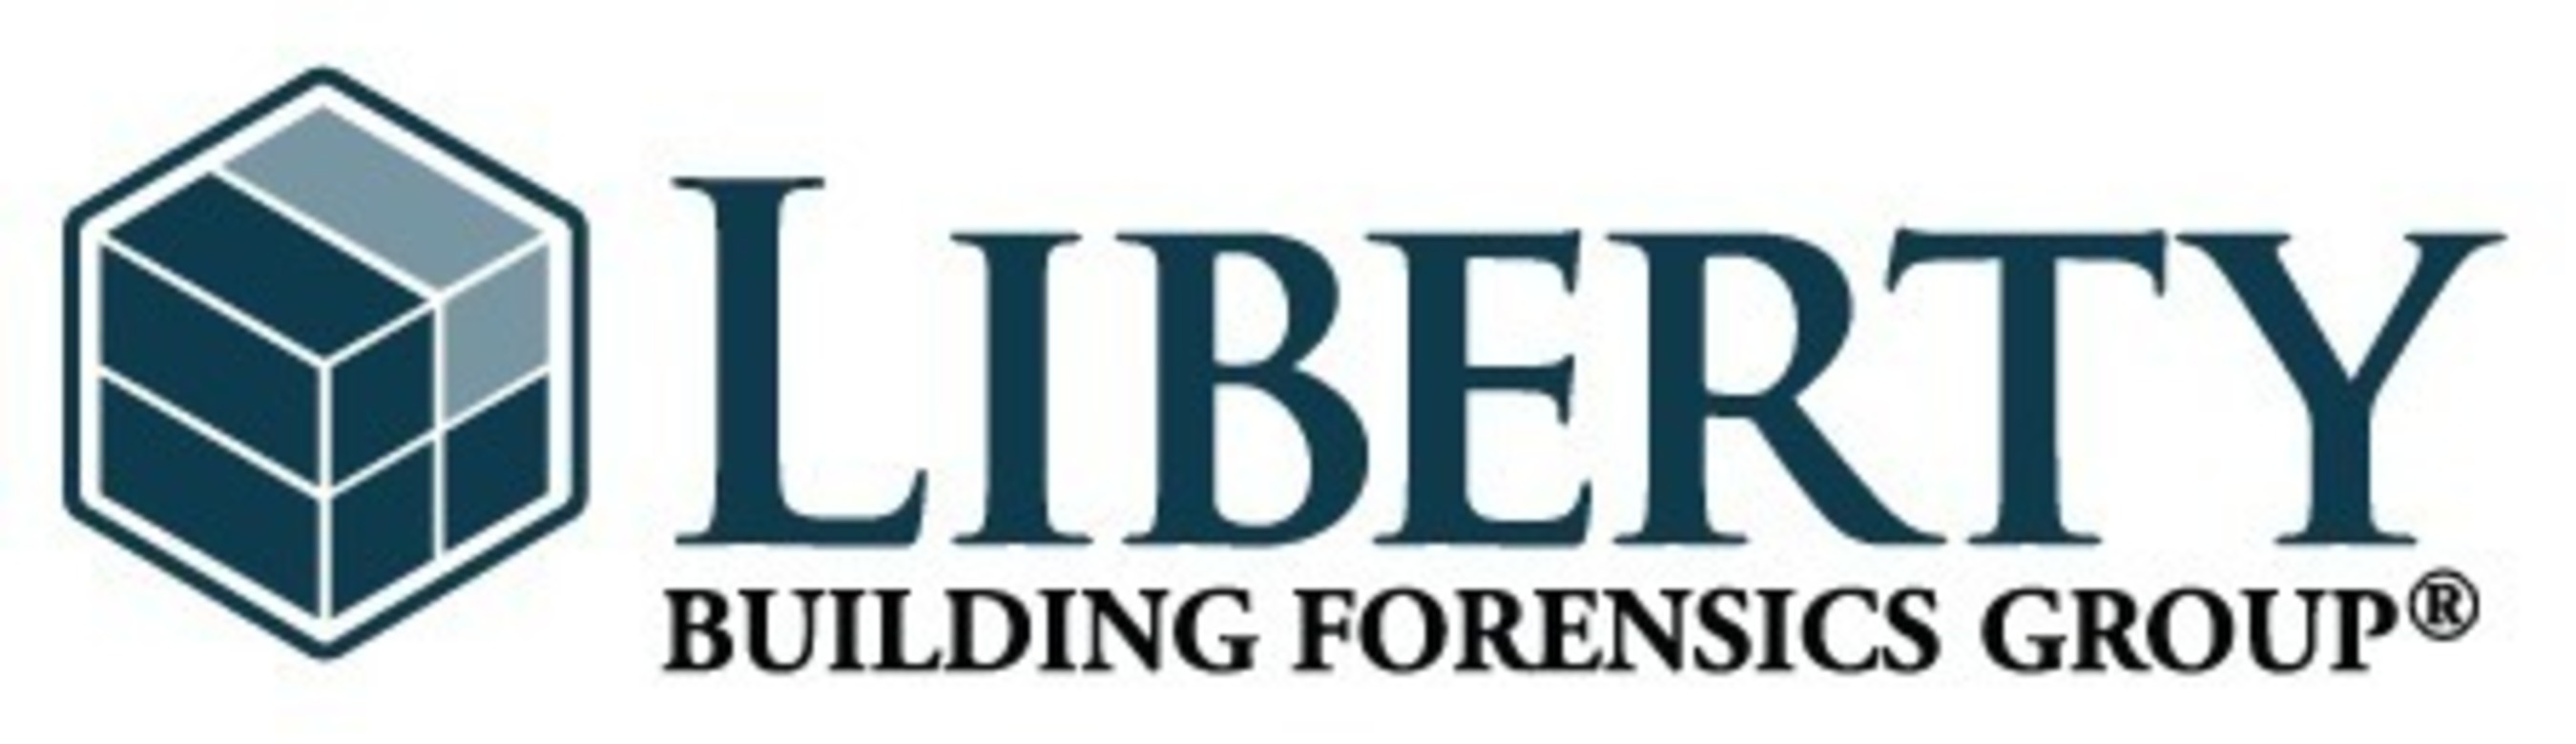 Liberty Building Forensics Group logo (PRNewsFoto/Liberty Building Forensics Group)